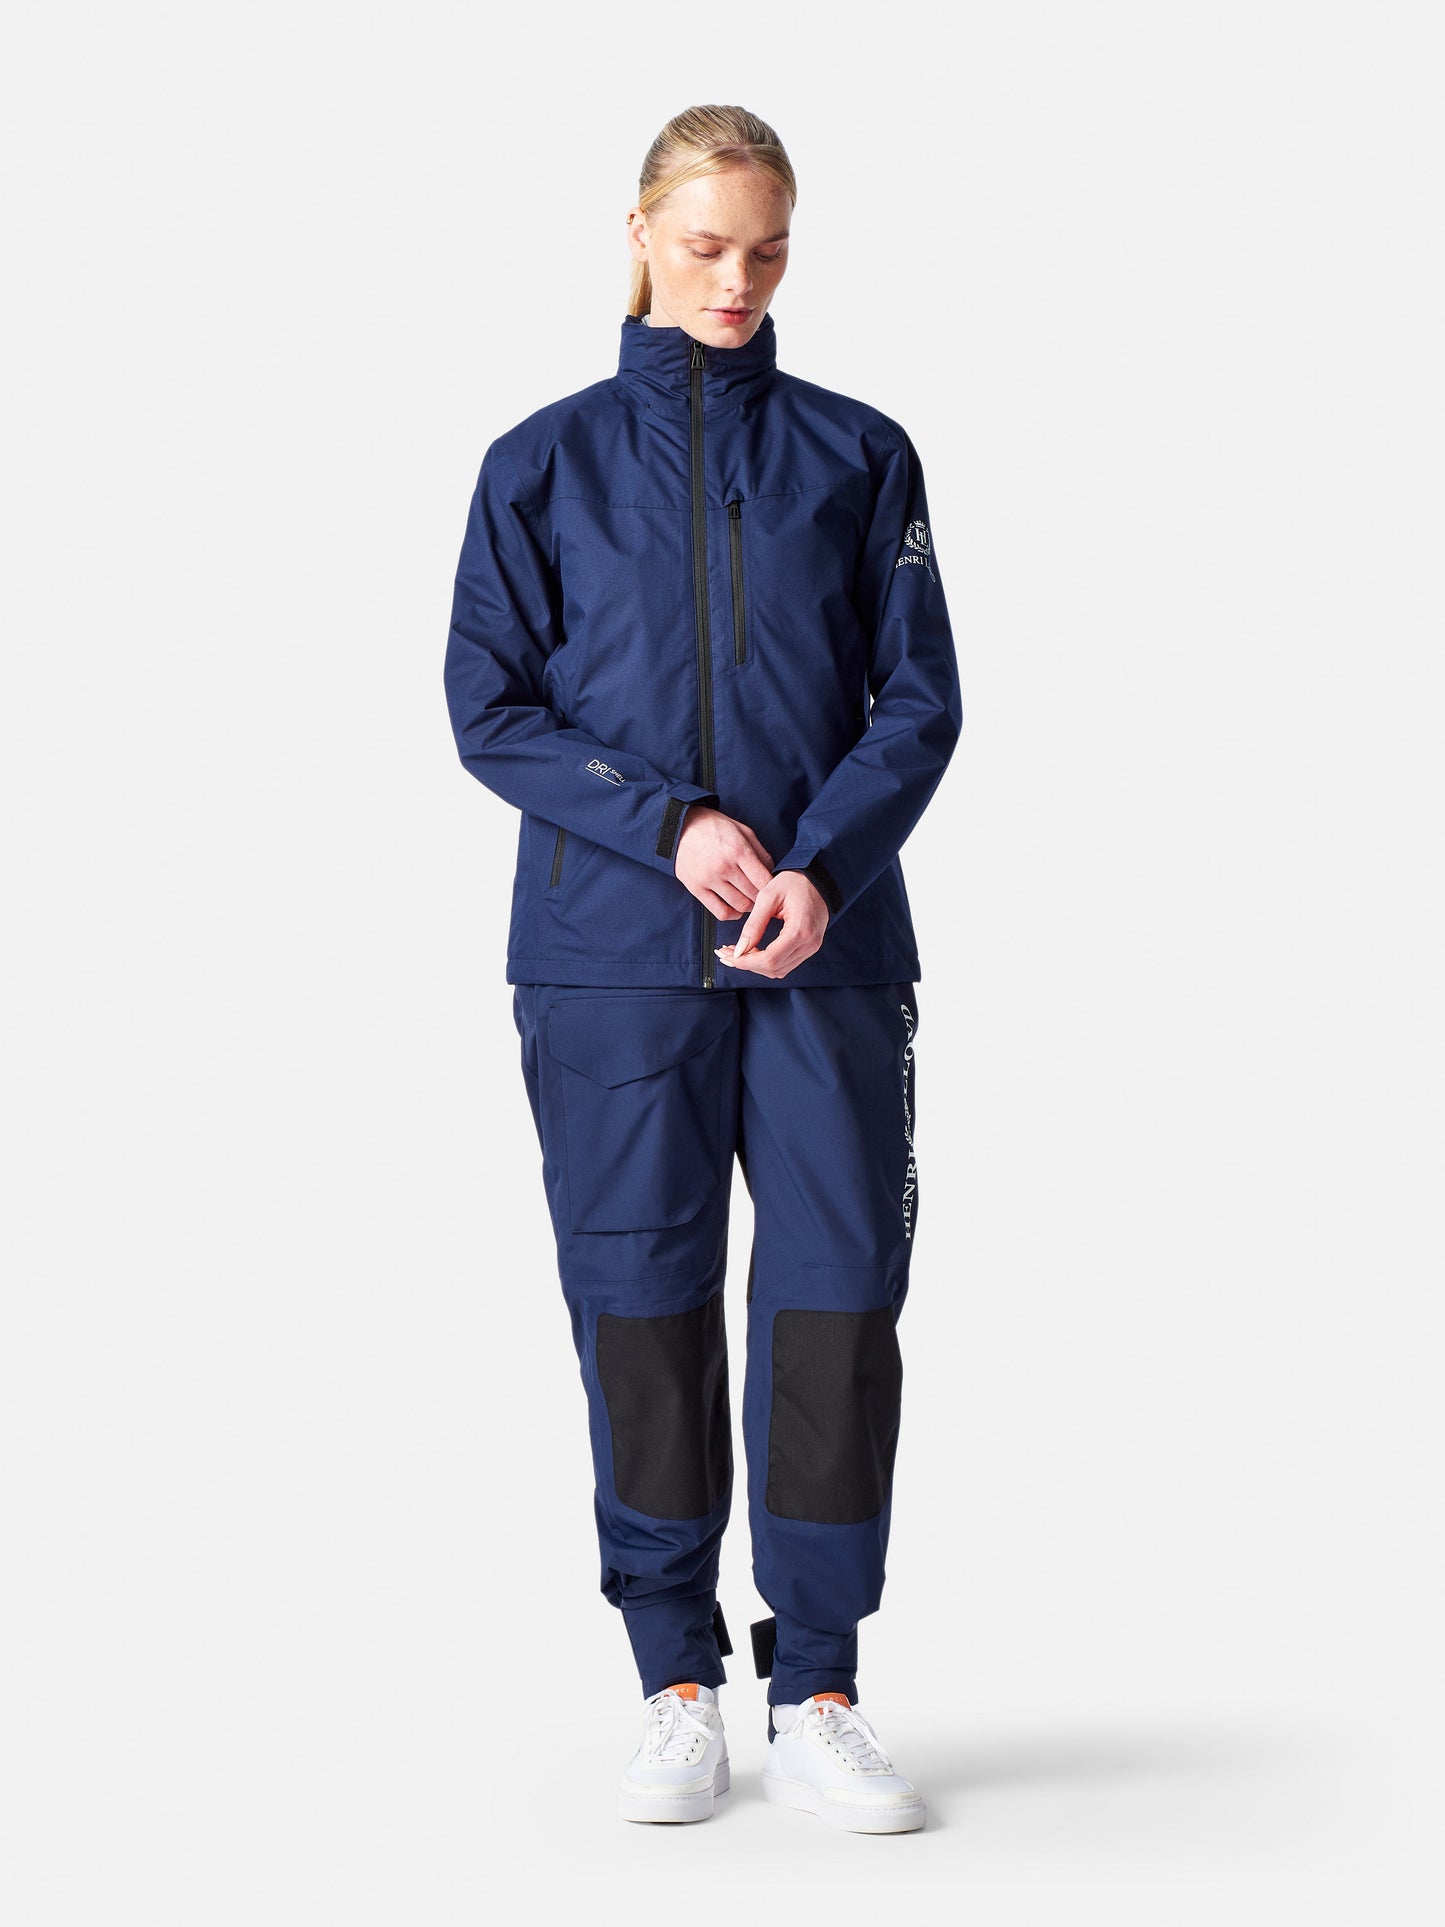 Women's Cool Breeze Jacket - Navy Blue